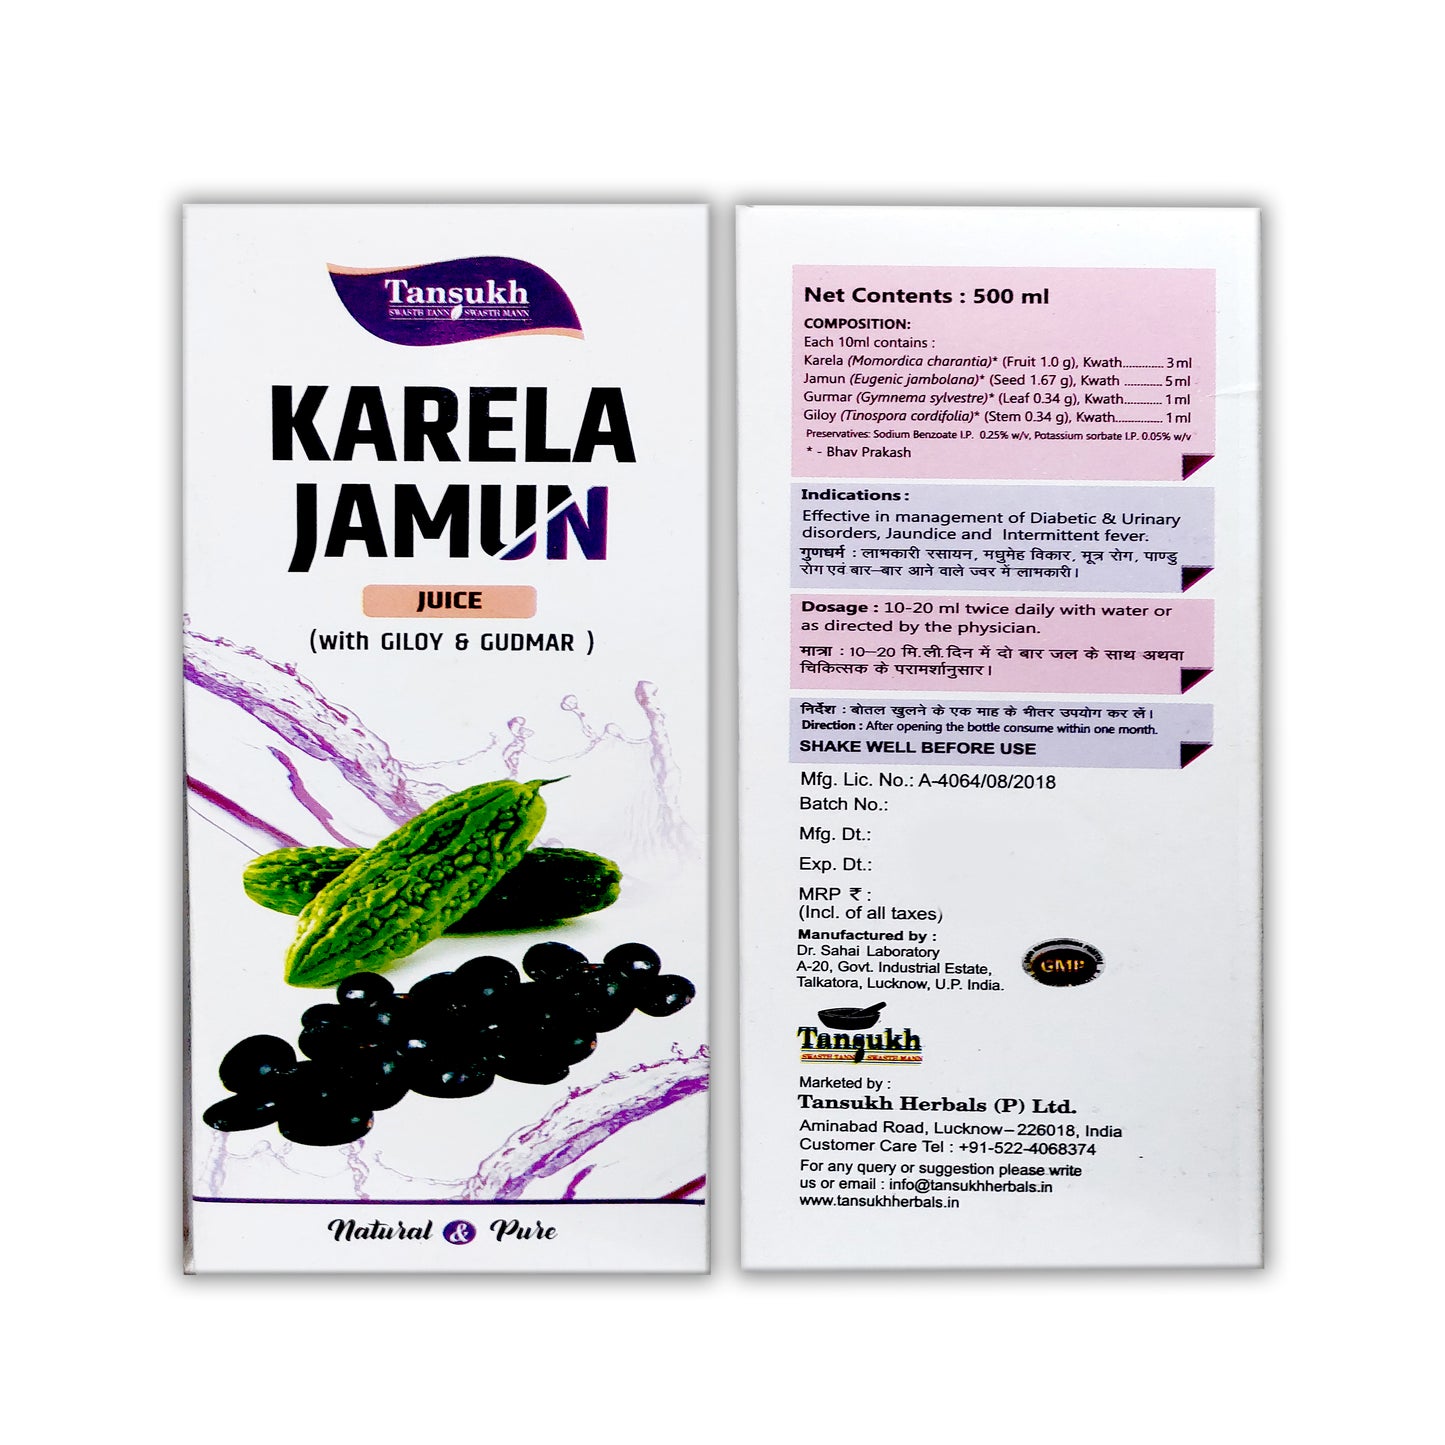 Tansukh Karela Jamun Juice Ayurvedic Medicine for Diabetes Urine Control Medicine